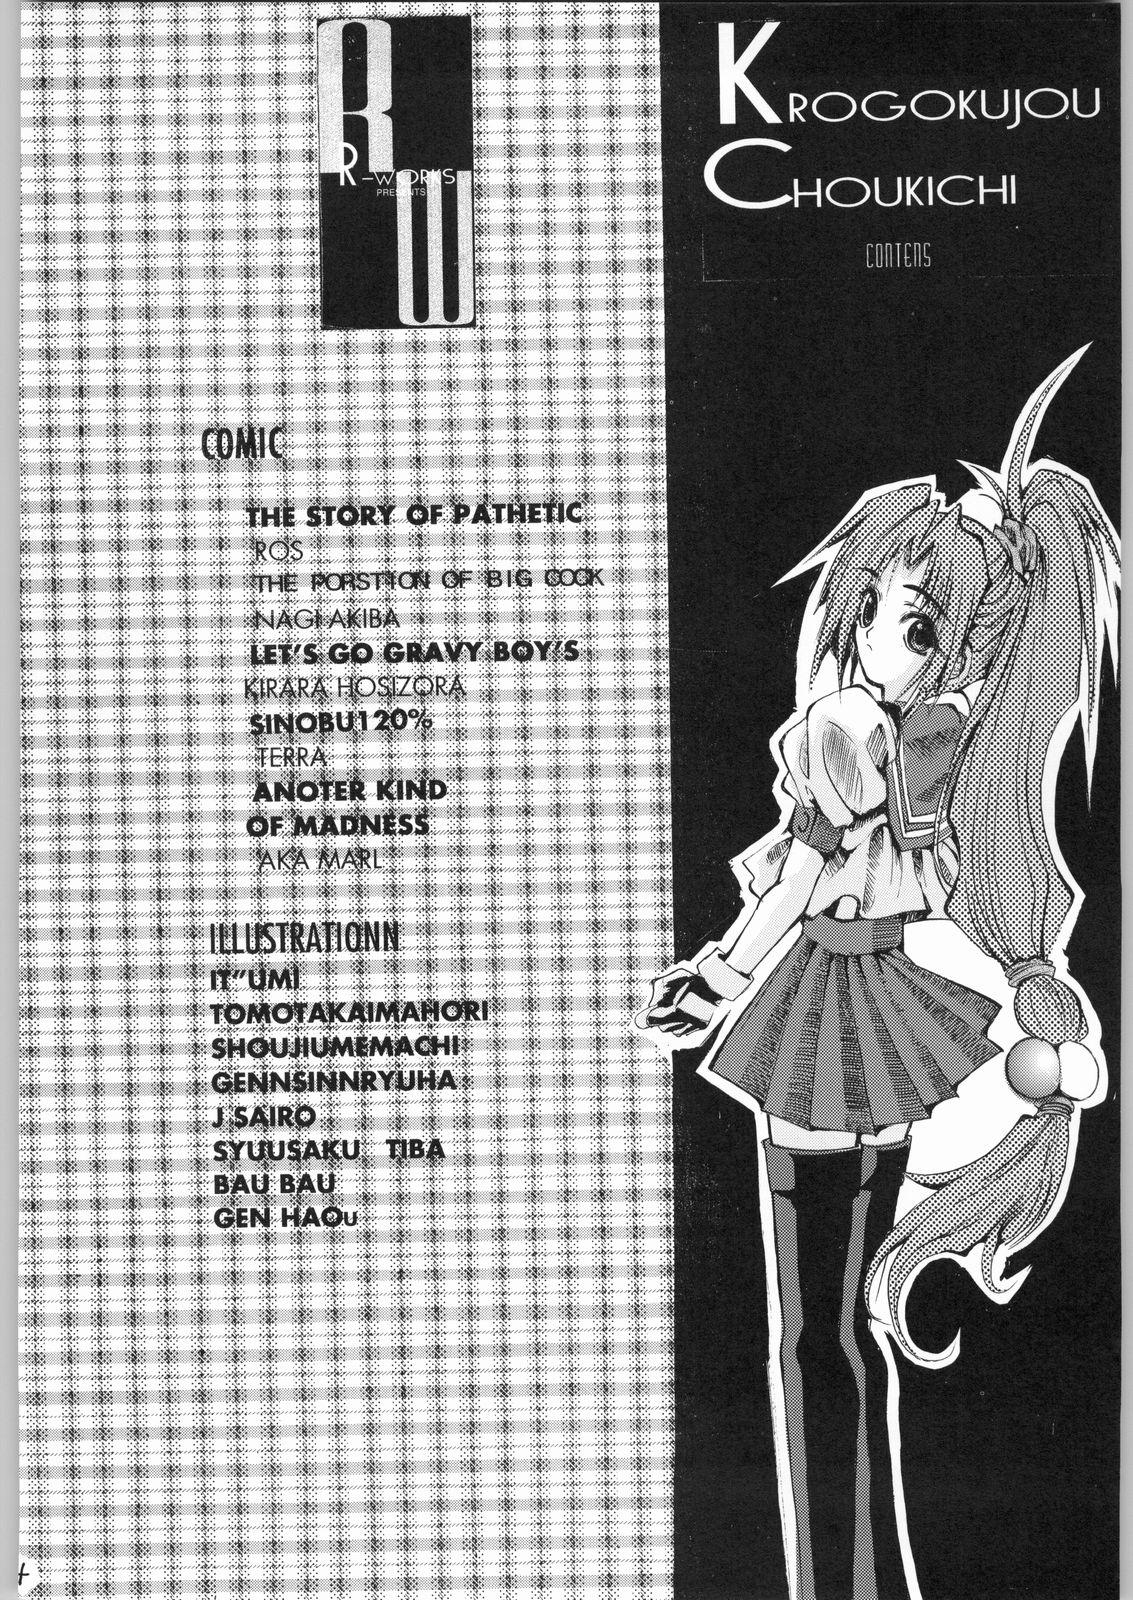 Unshaved Kuro Gokujou Choukichi - Asuka 120 Mms - Page 3